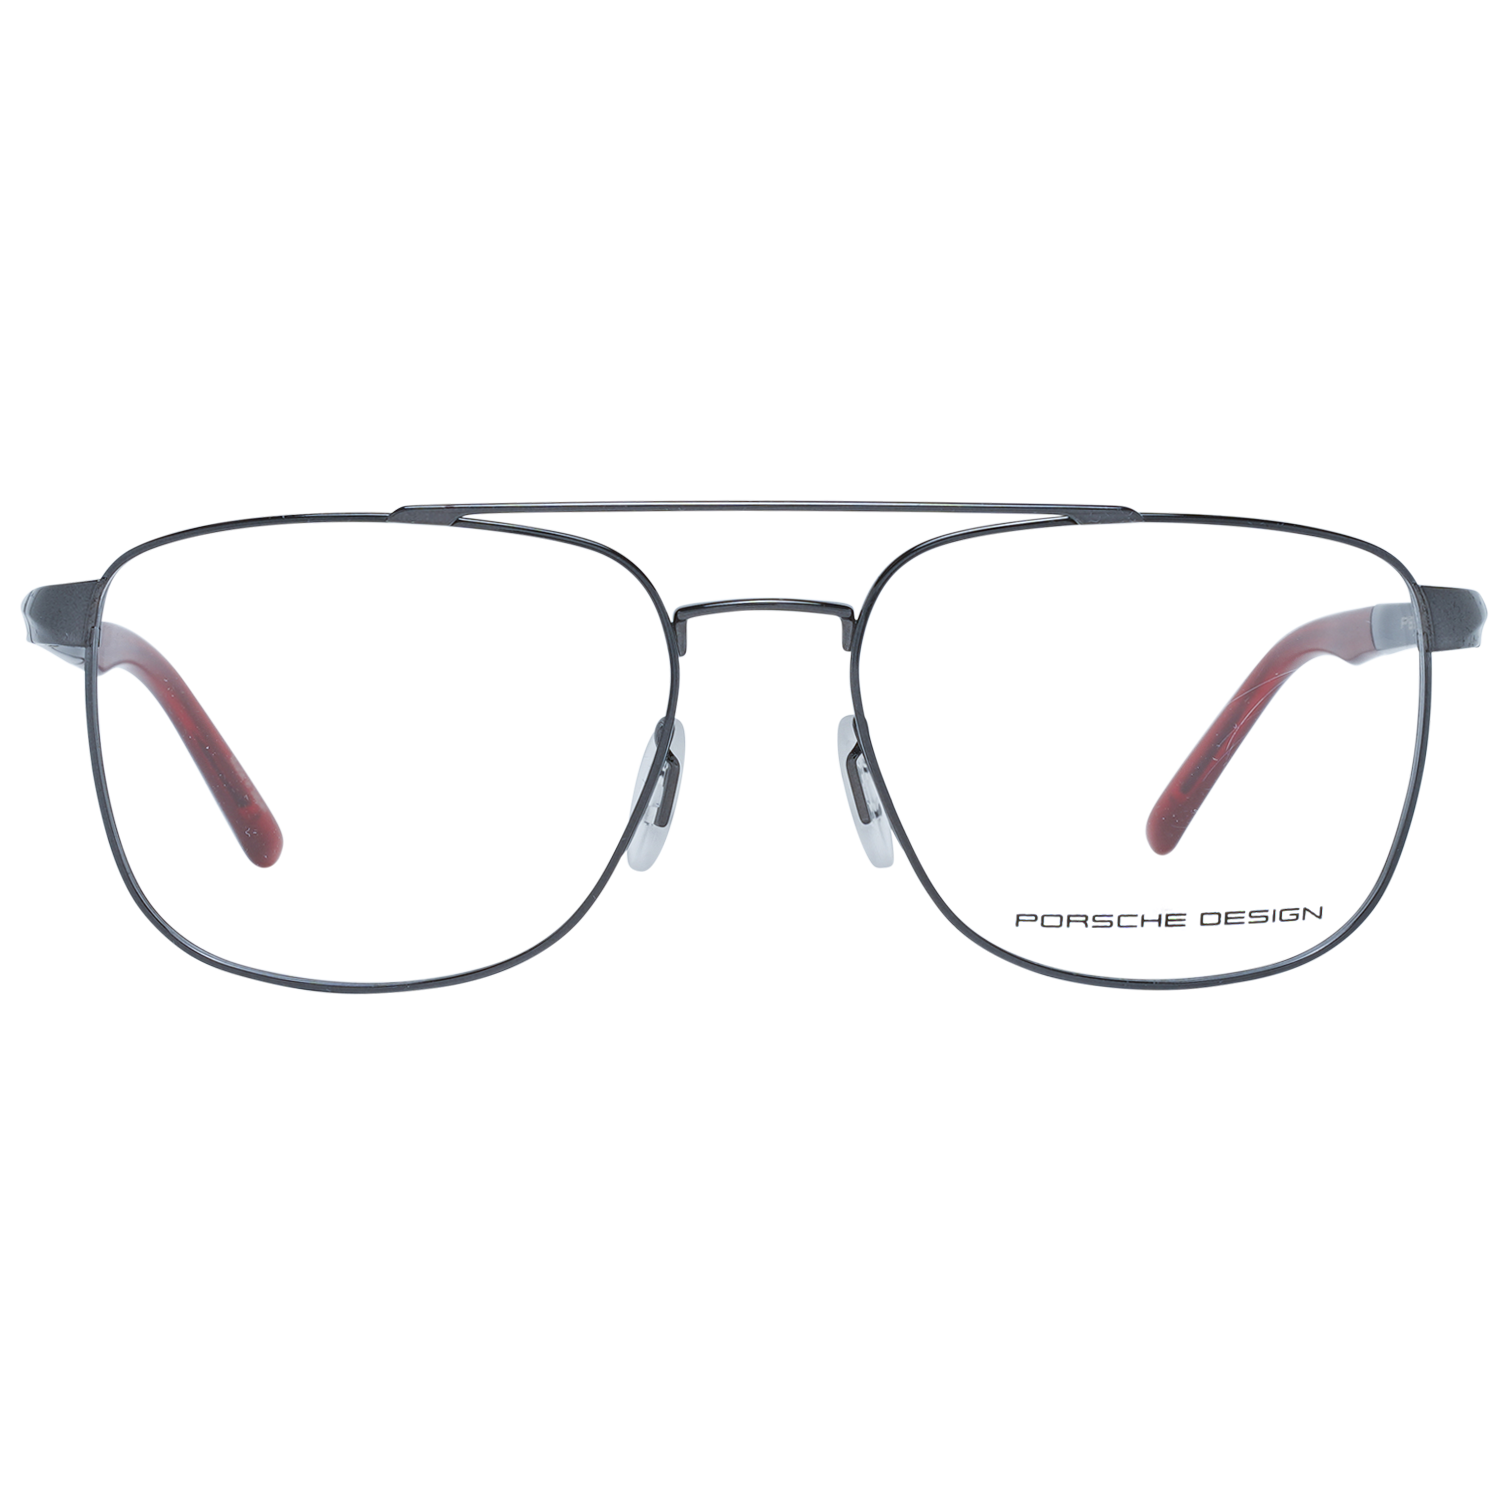 Porsche Design Eyeglasses Porsche Design Glasses Frames P8370 C 56 Titanium Eyeglasses Eyewear UK USA Australia 